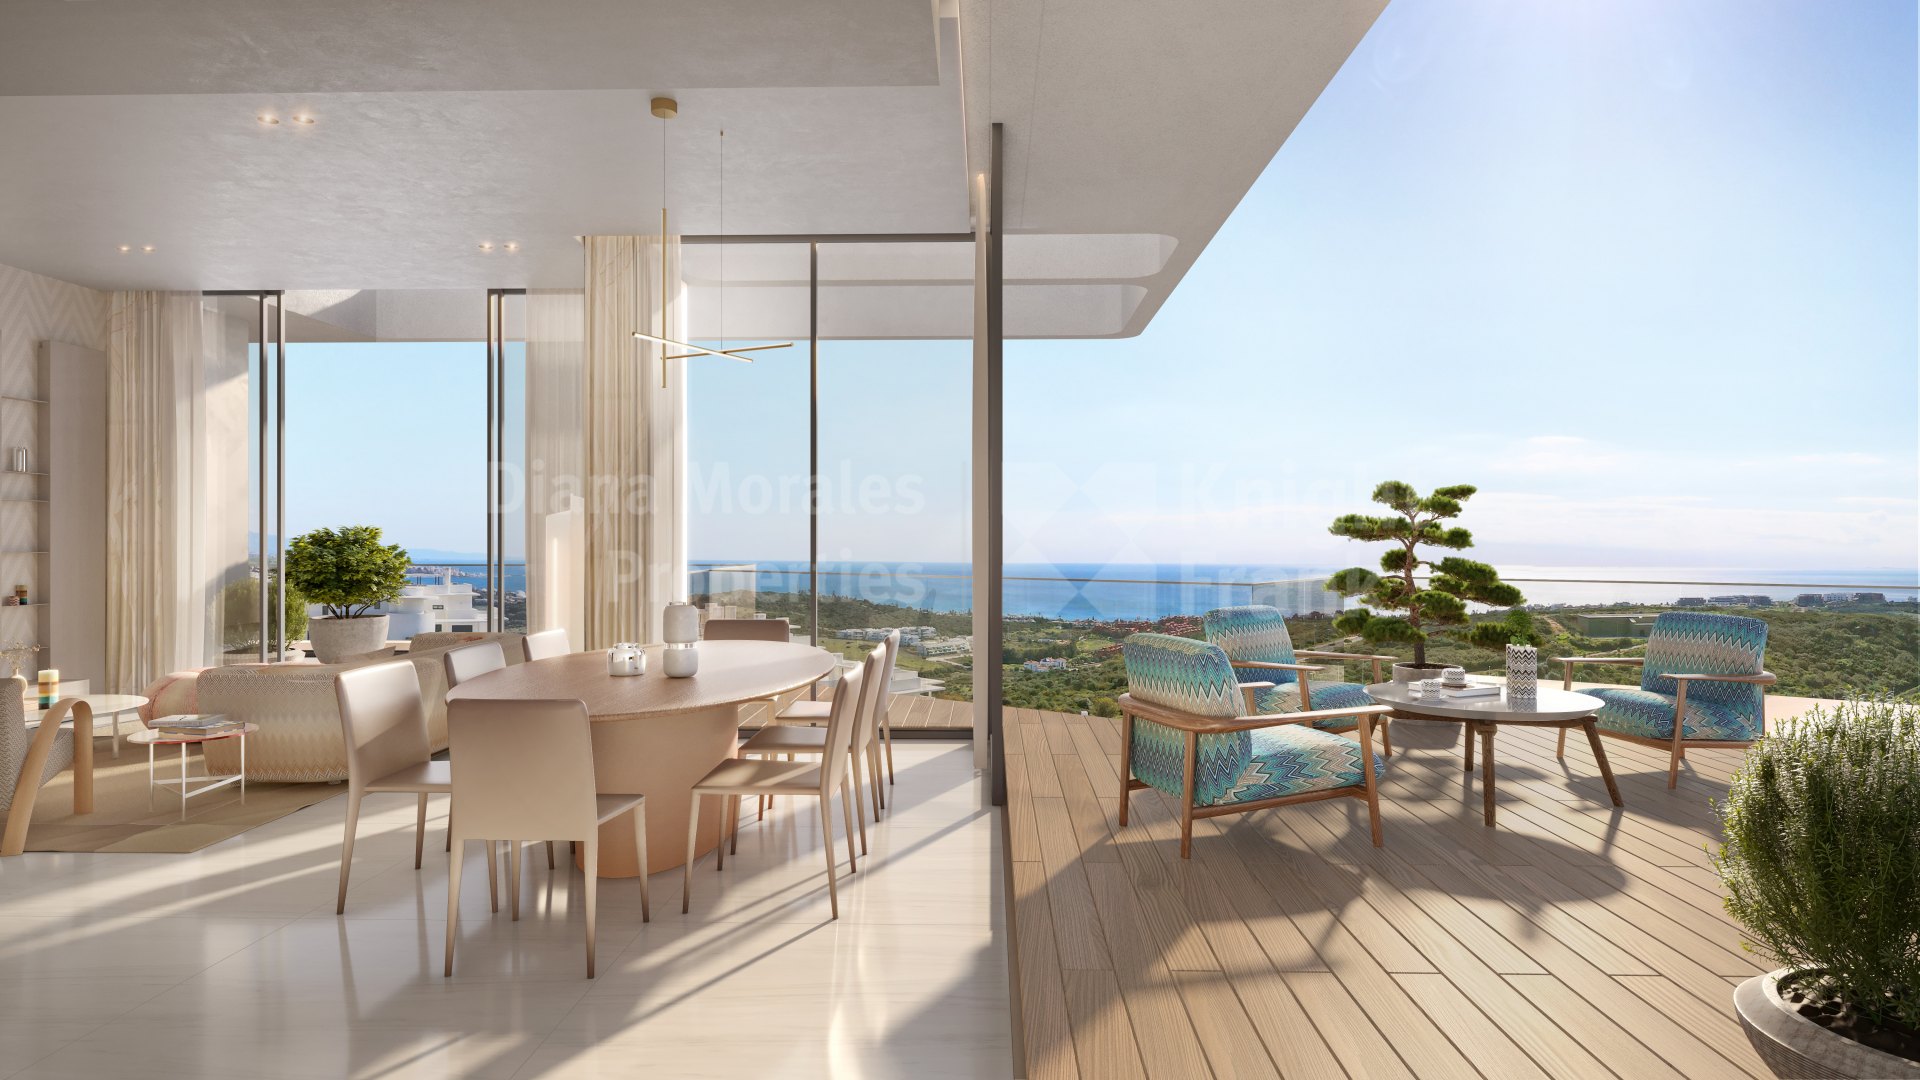 Finca Cortesin, Marea interiors by Missoni: Двухкомнатная квартира с видом на море